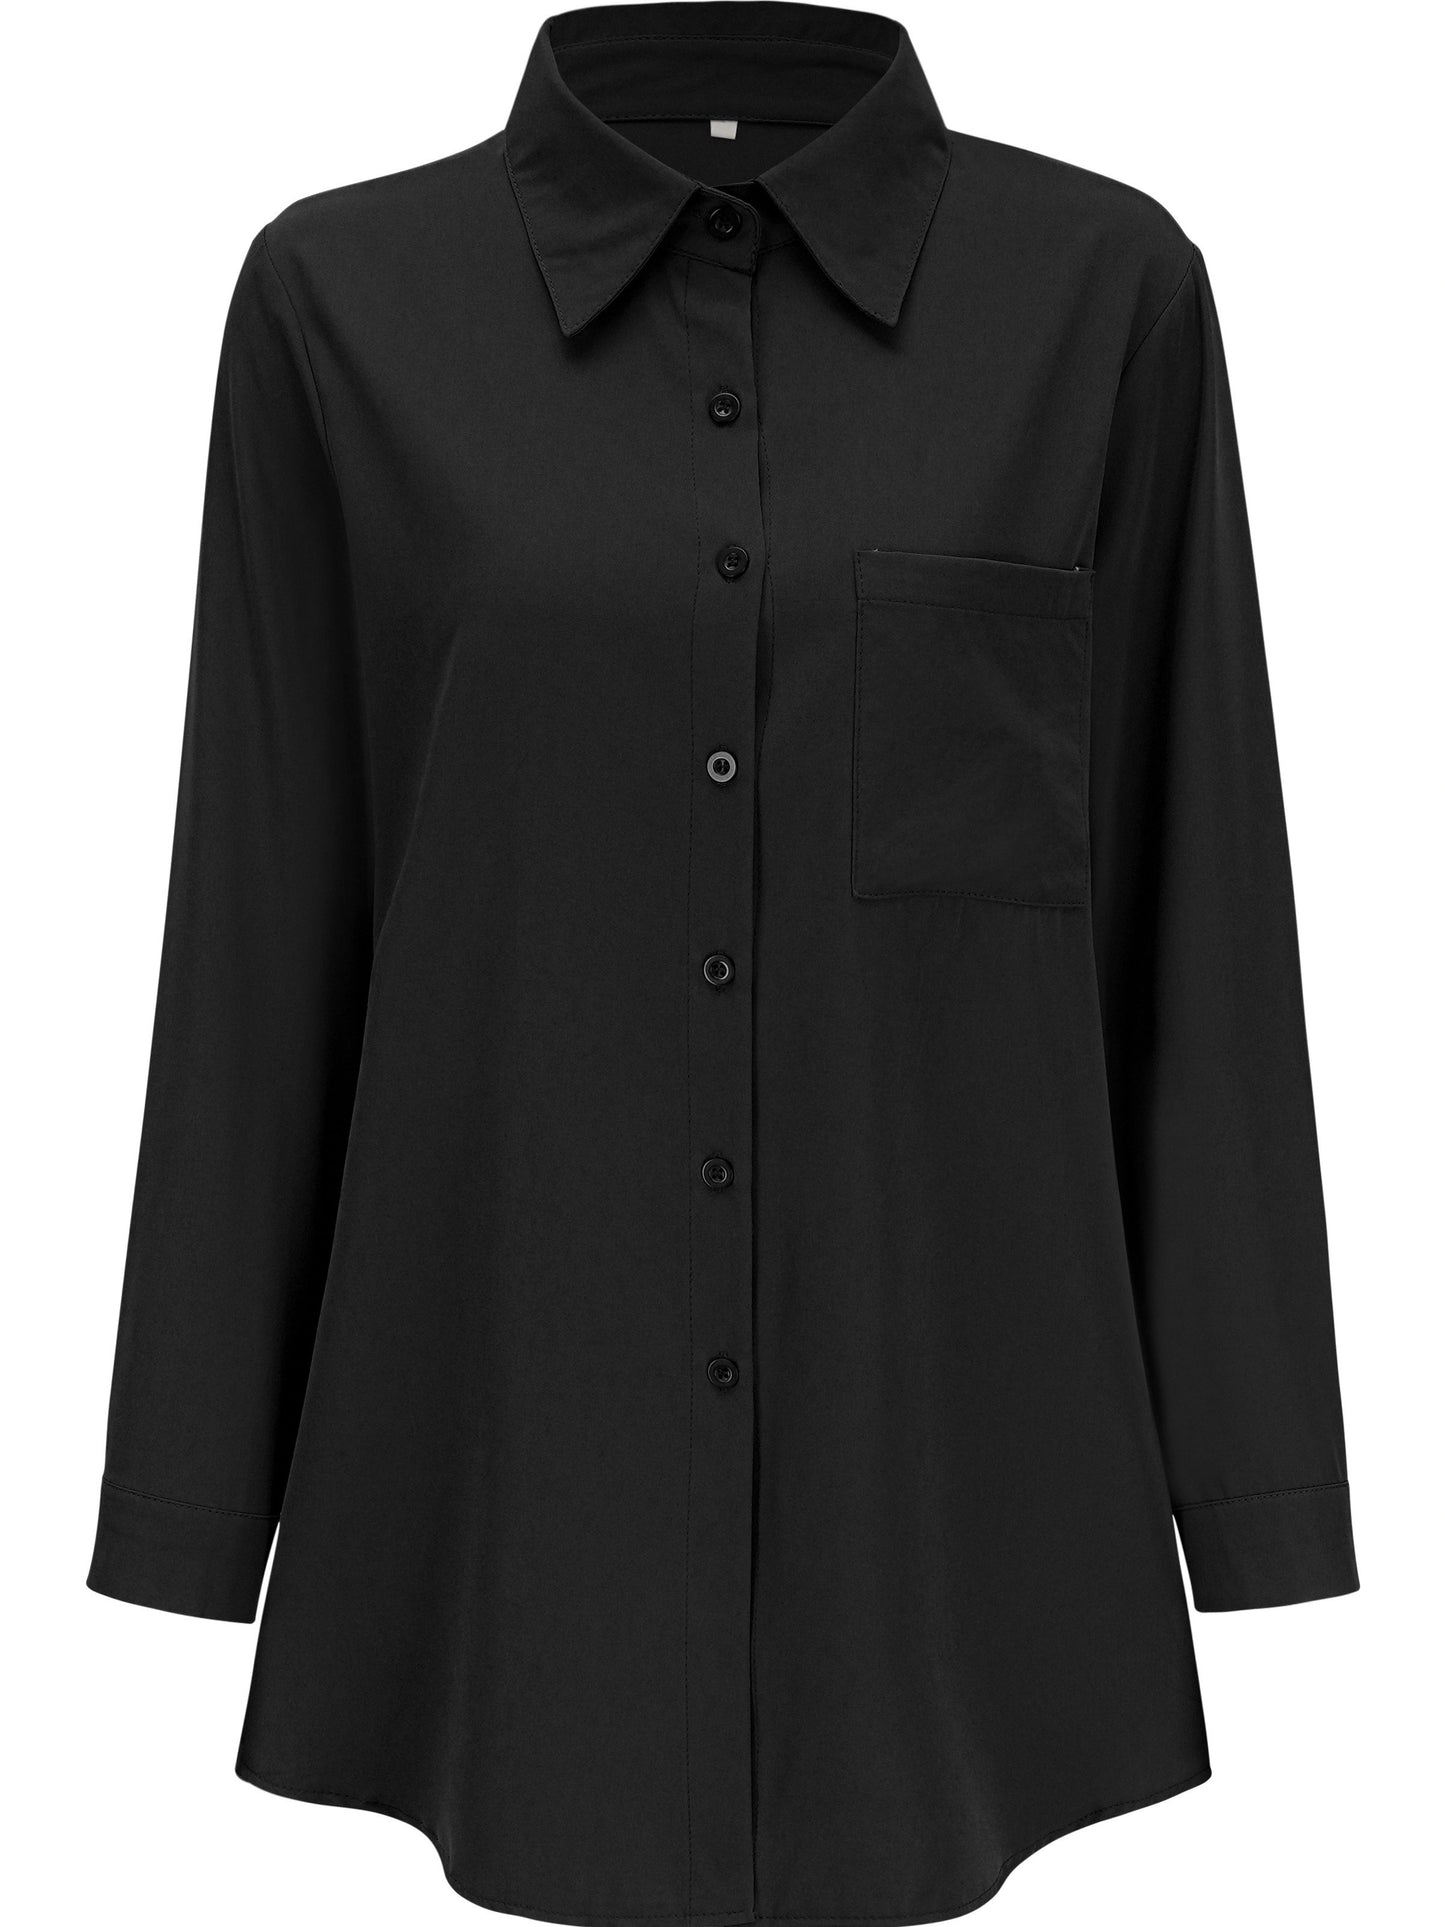 Plus Size Casual Blouse, Women's Plus Solid Long Sleeve Button Up Lapel Collar Shirt Top